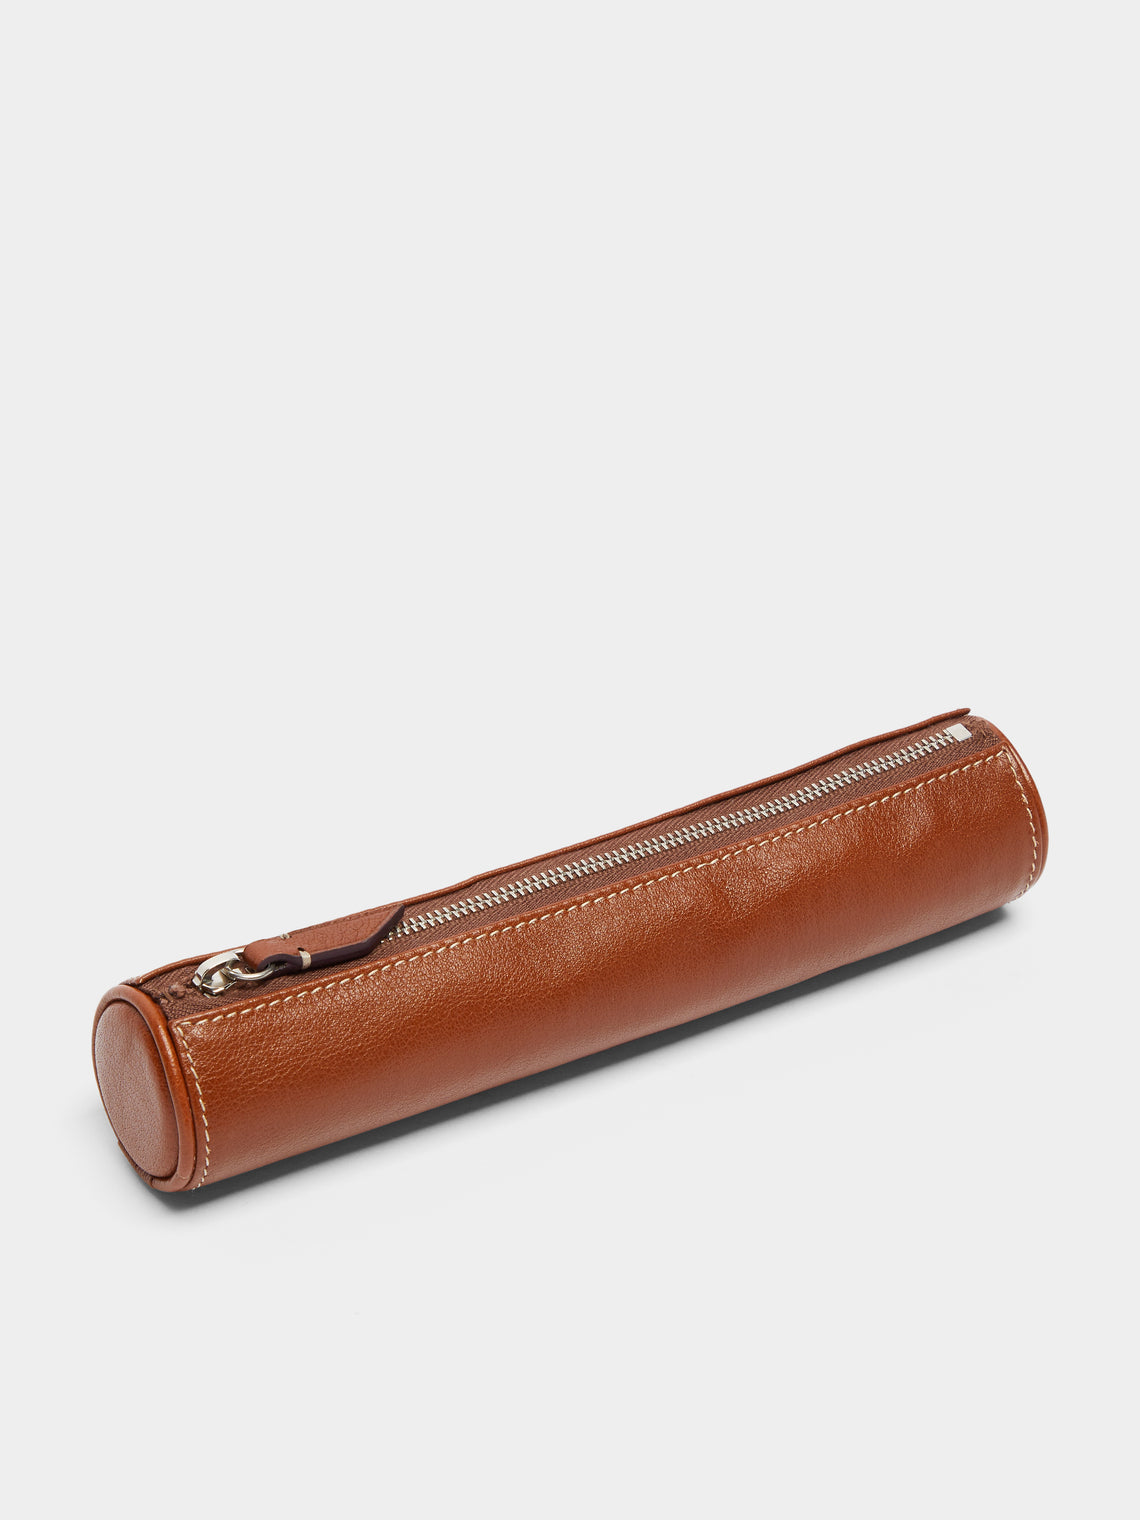 Métier - Leather Pencil Case -  - ABASK - 